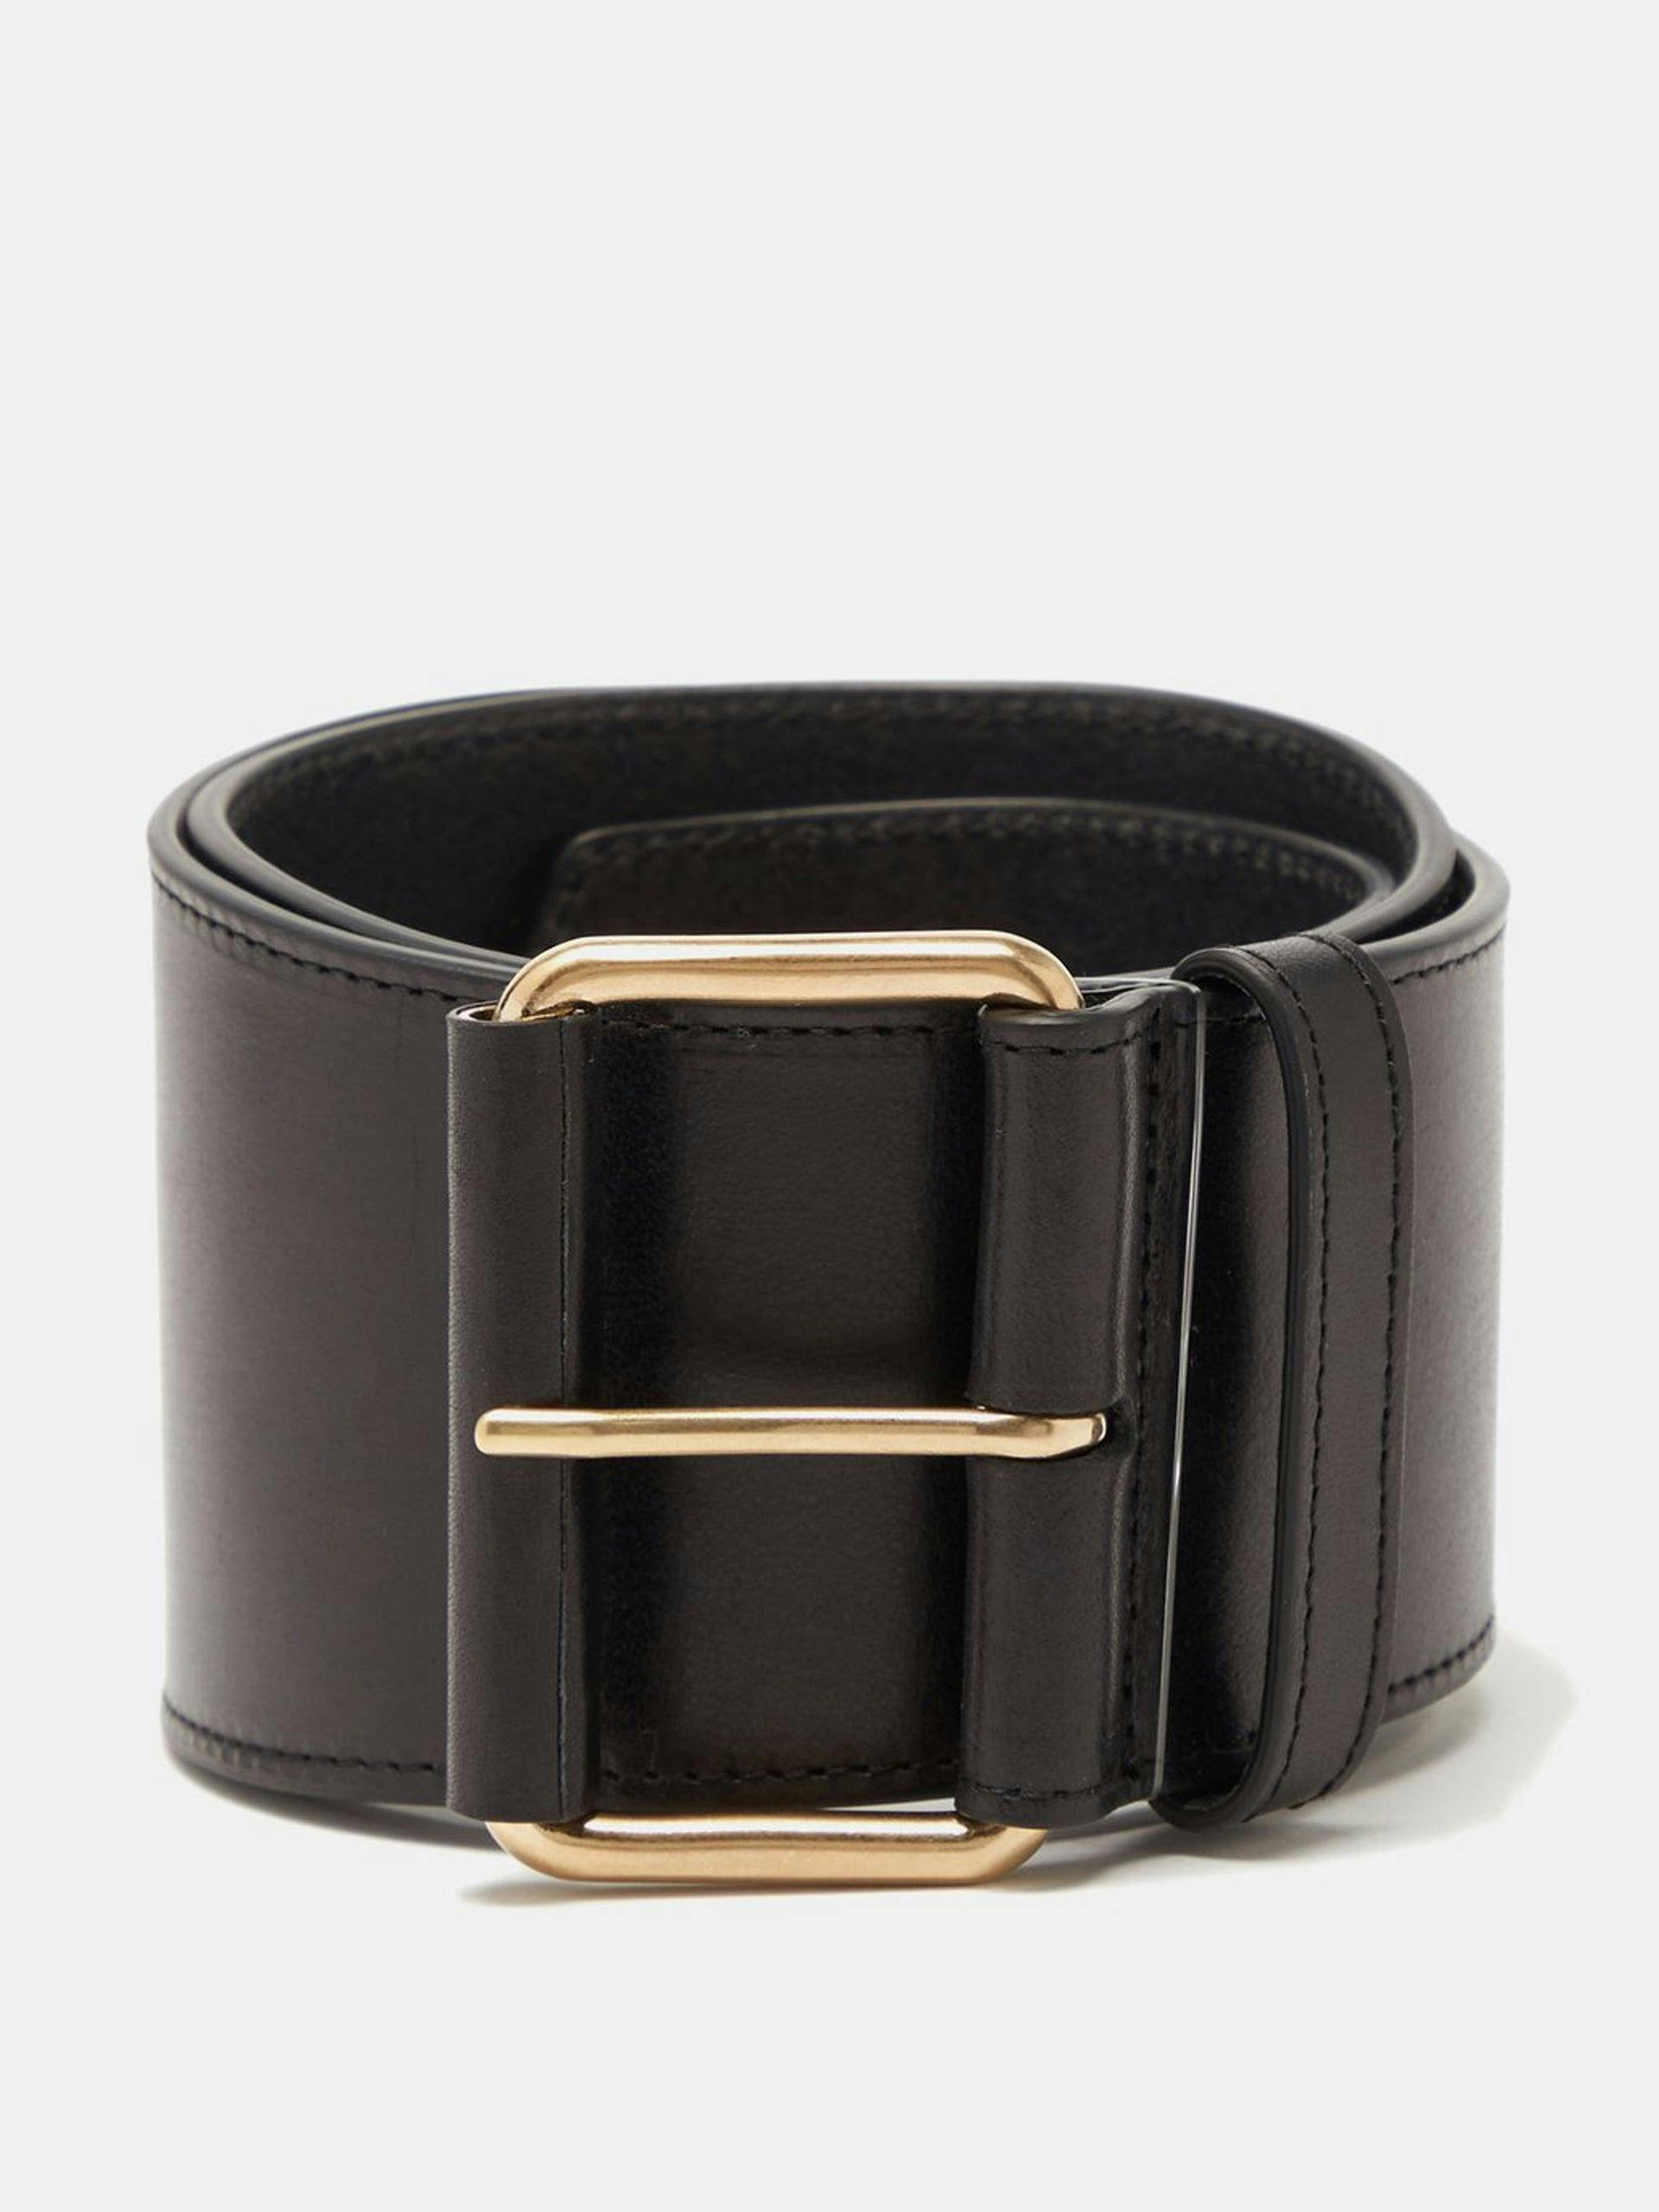 Leather waist belt